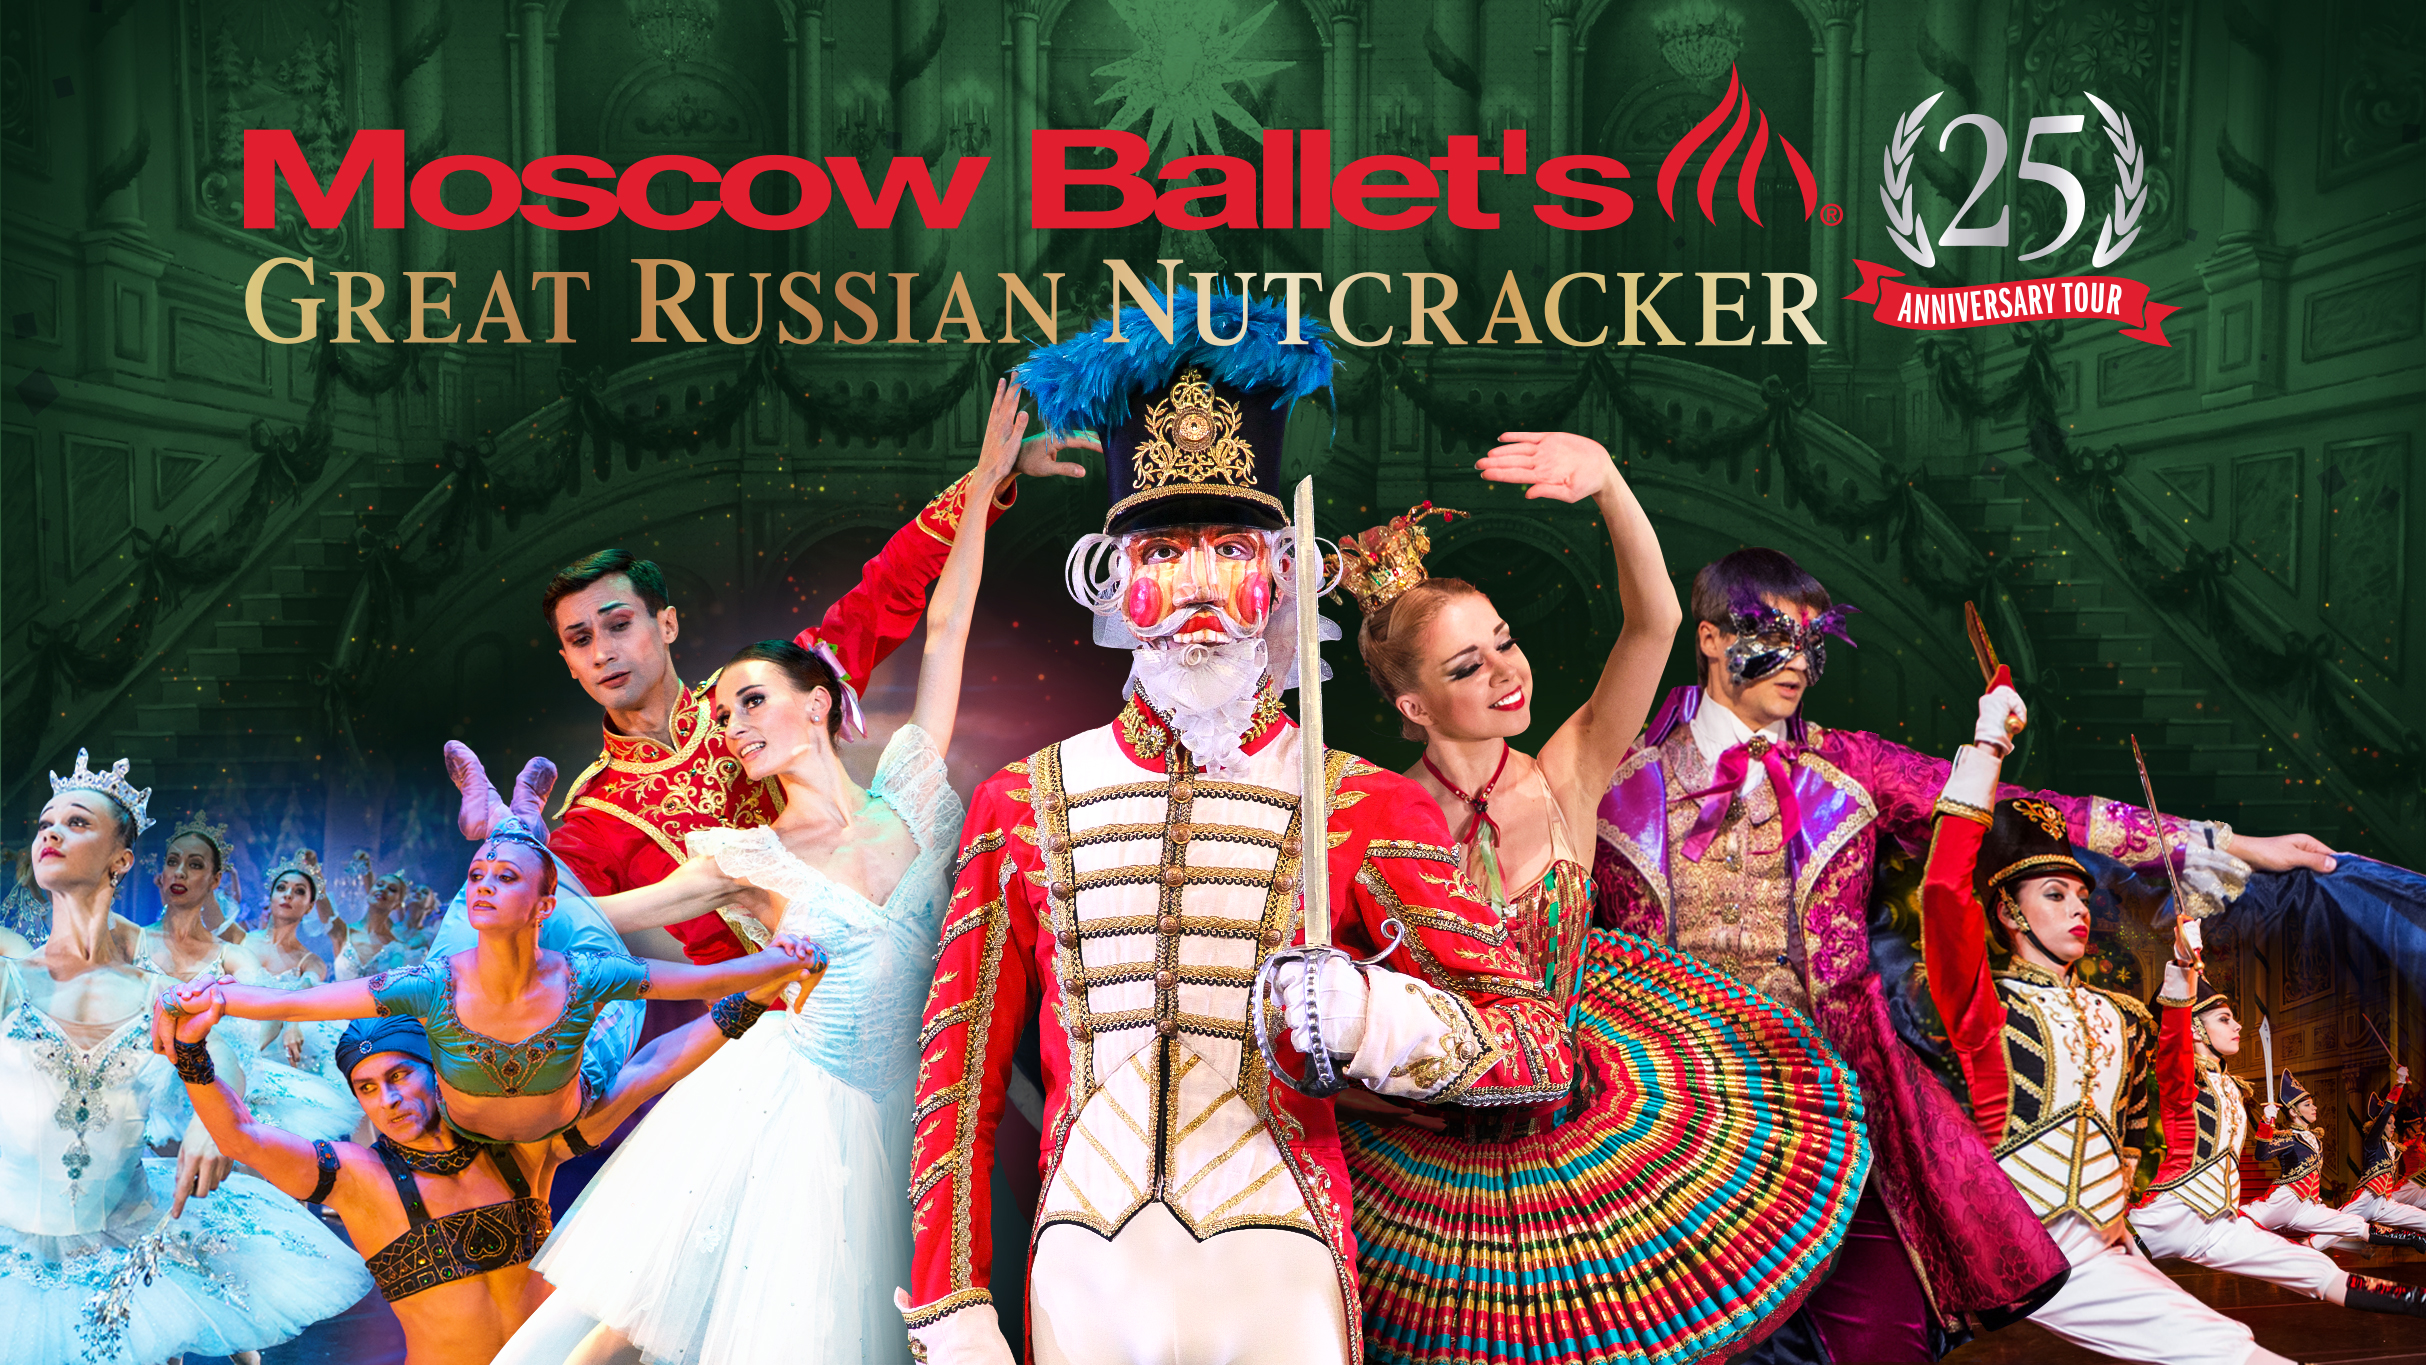 Moscow Ballet’s Great Russian Nutcracker